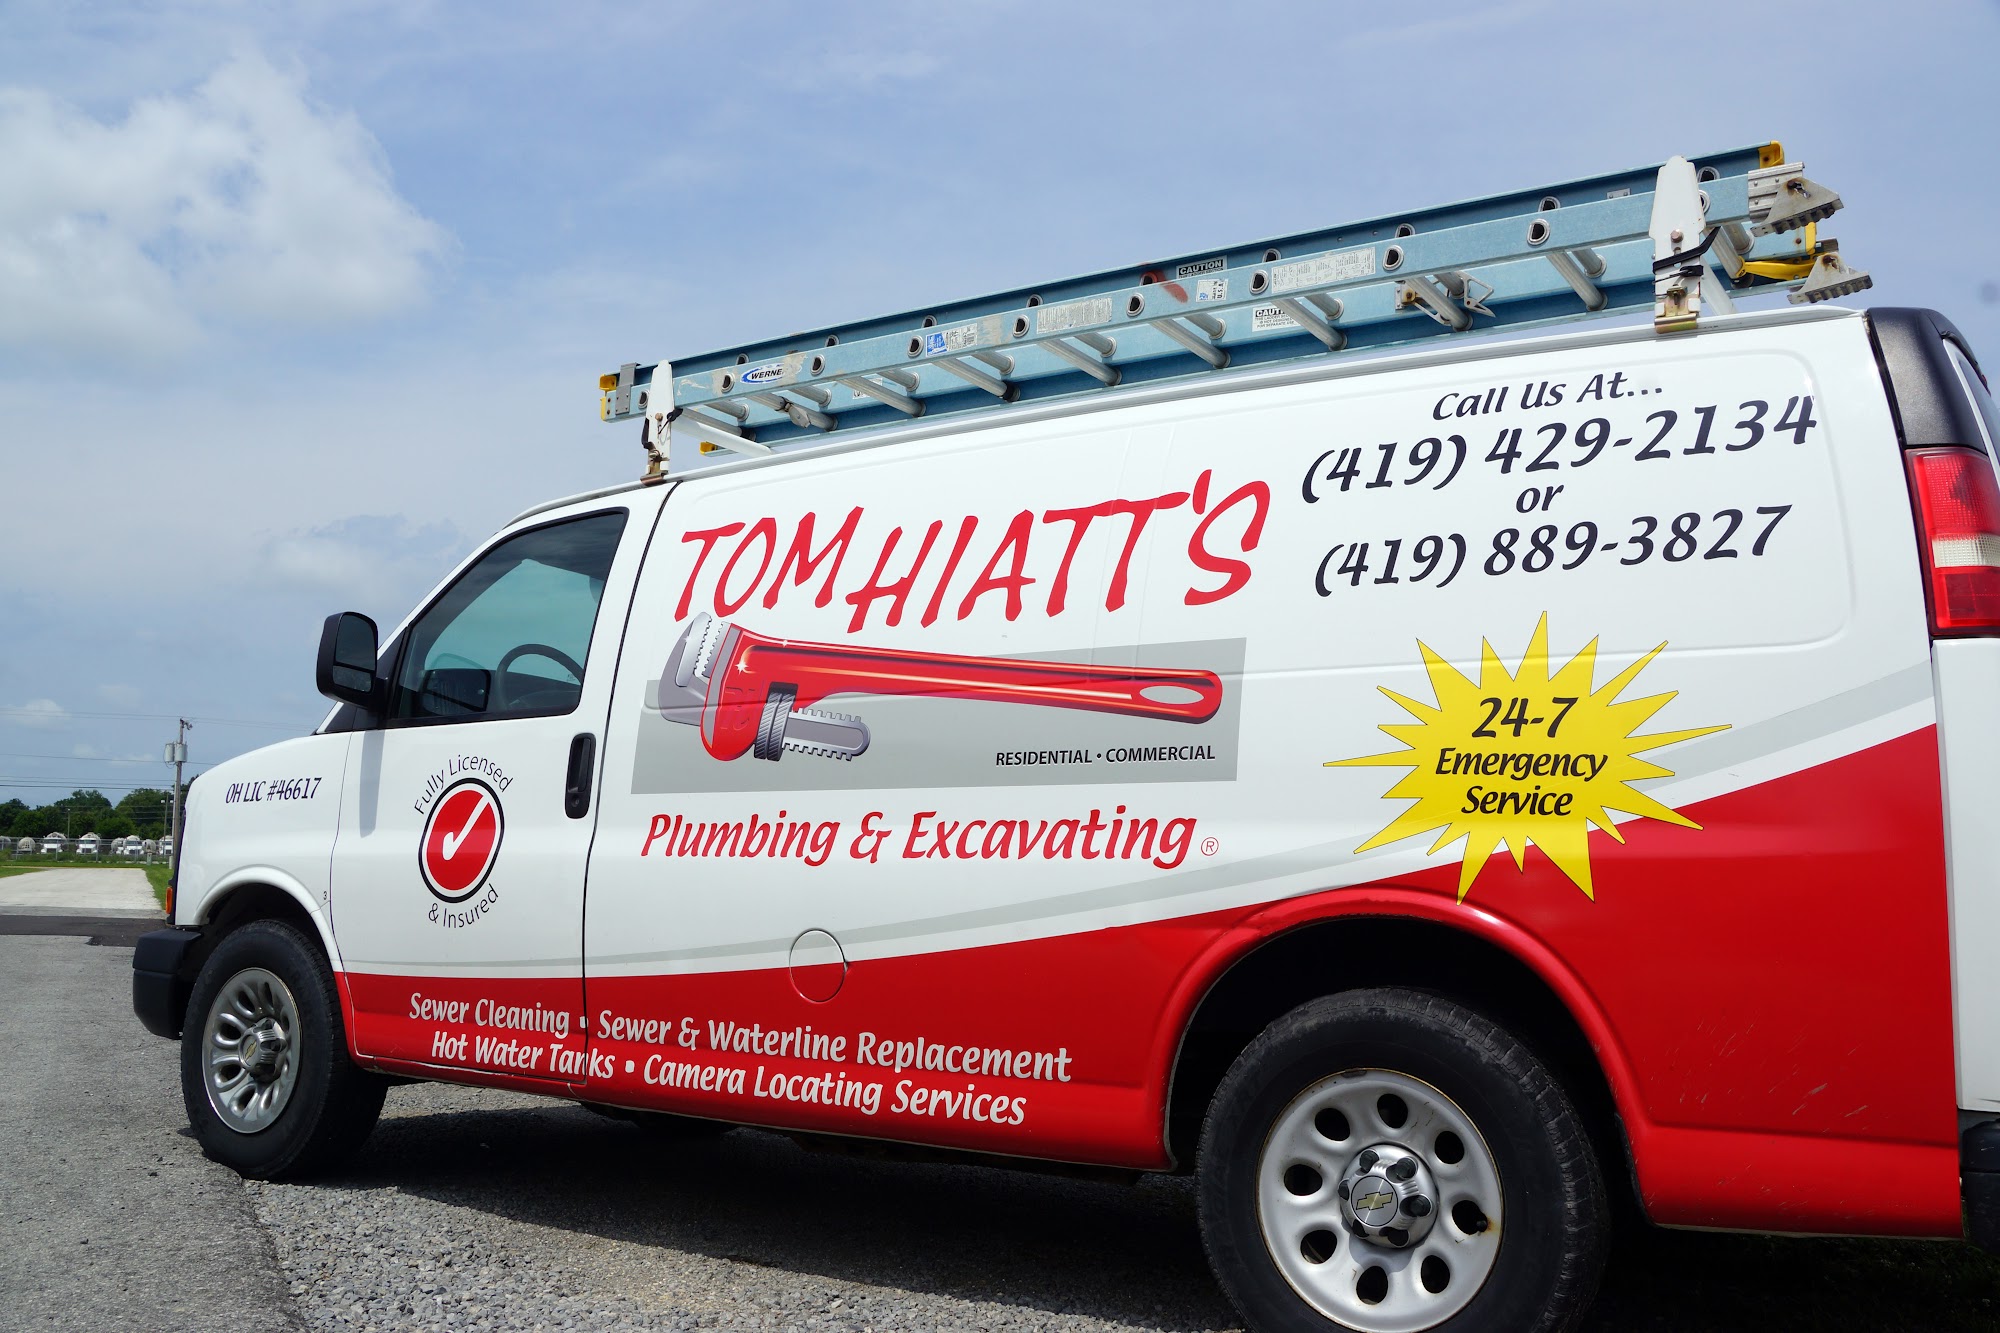 Tom Hiatt's Plumbing & Excavating Co, LLC.